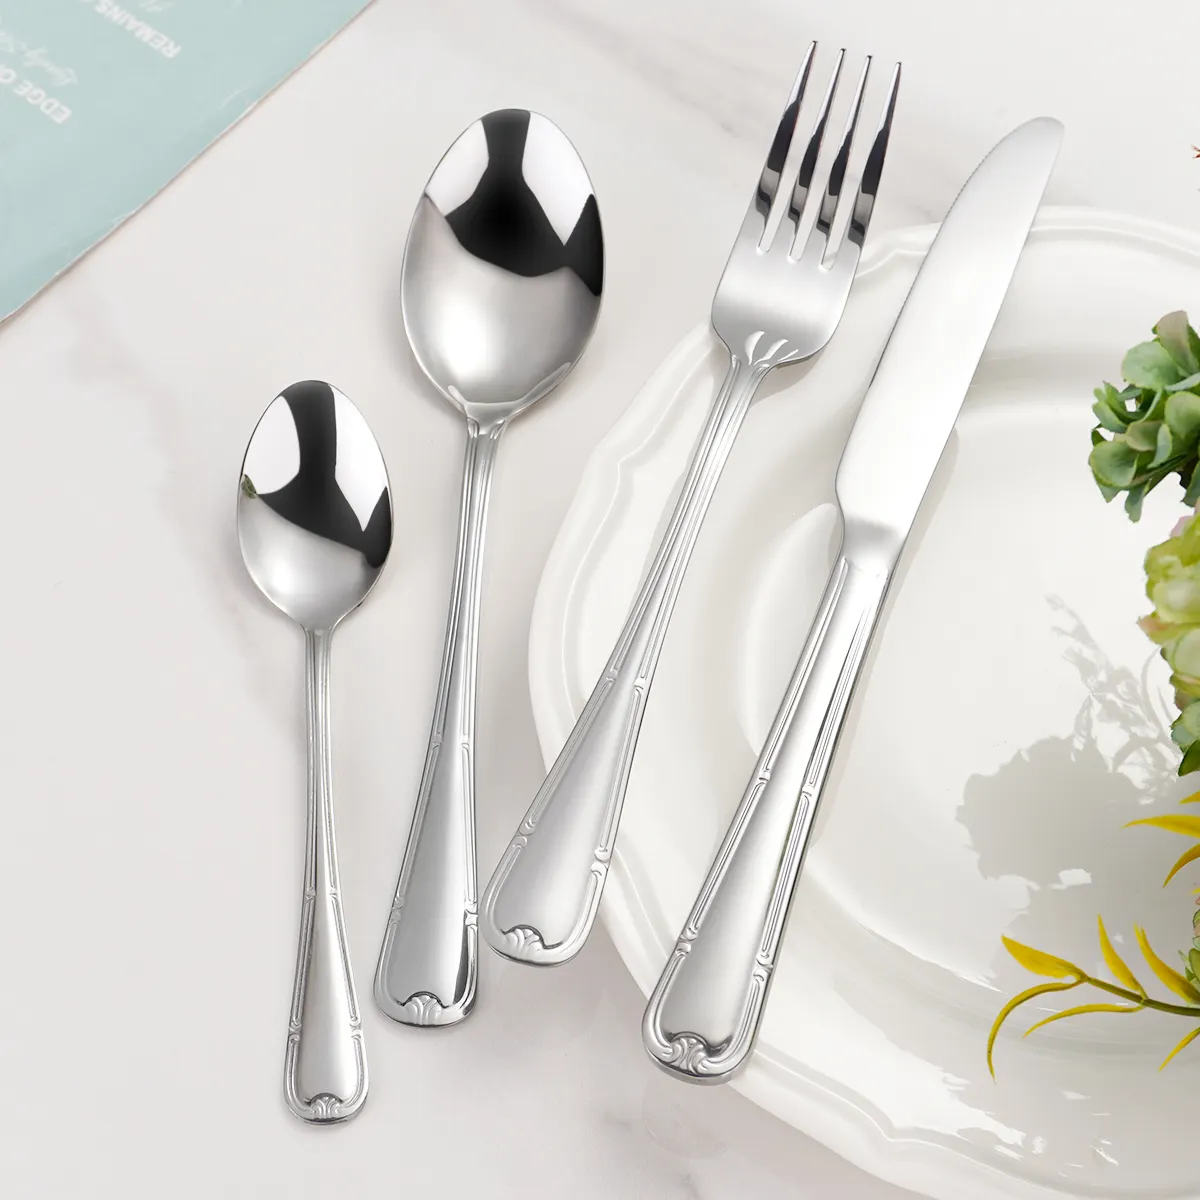 Middle East Restaurant 4/48/144 Pcs Silverware Metal Fork Knife And Spoon Wedding Flatware Heavy Stainless Steel Cutlery set